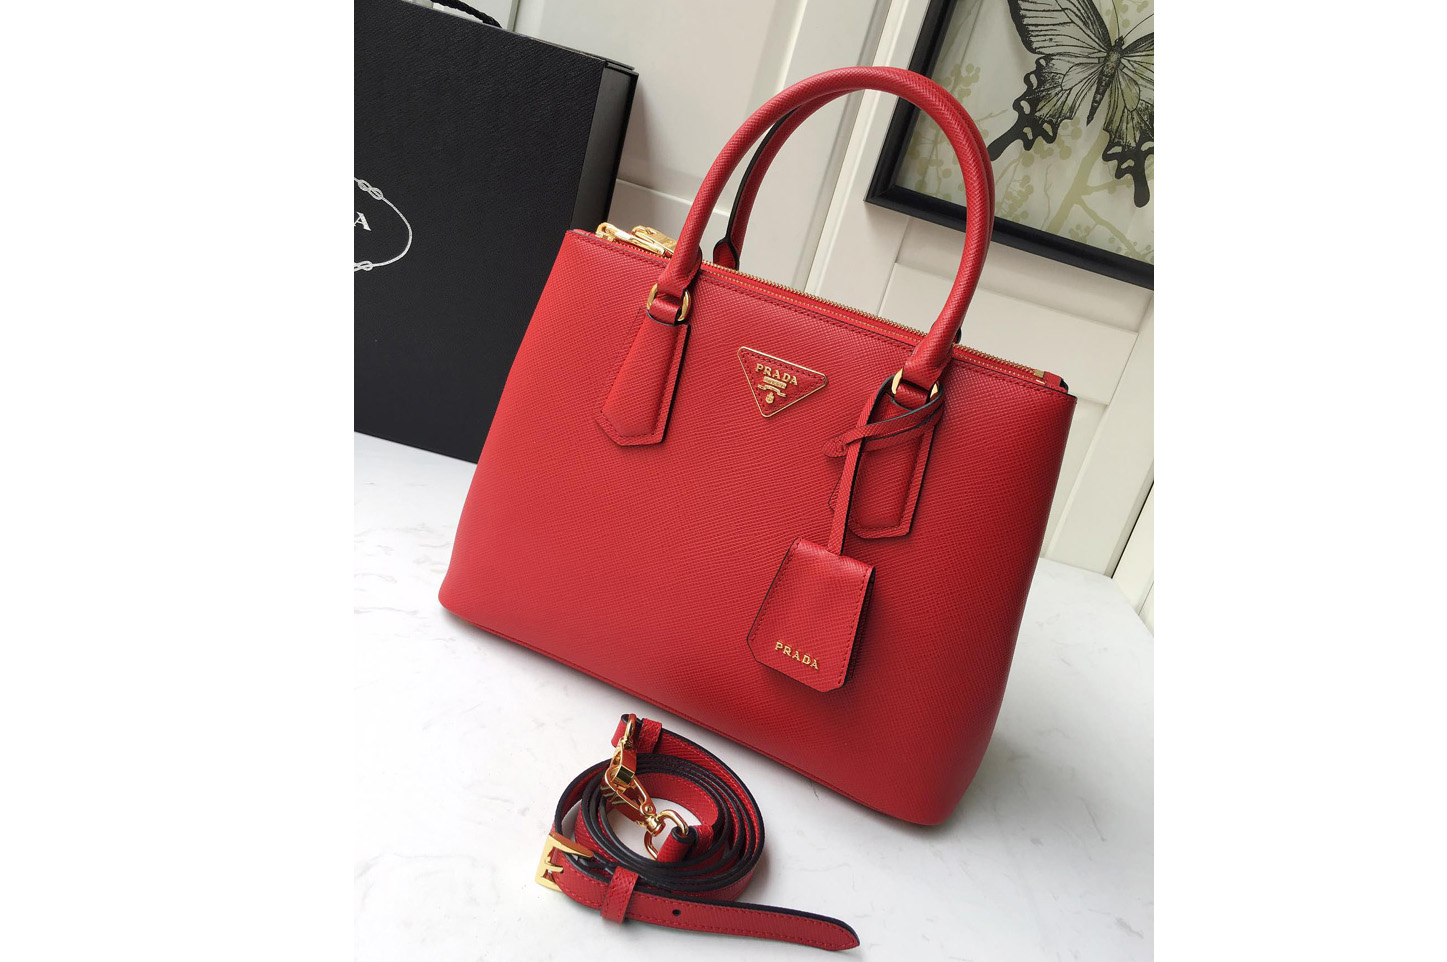 Prada 1BA232 Medium Prada Galleria Saffiano leather bag in Red Saffiano leather